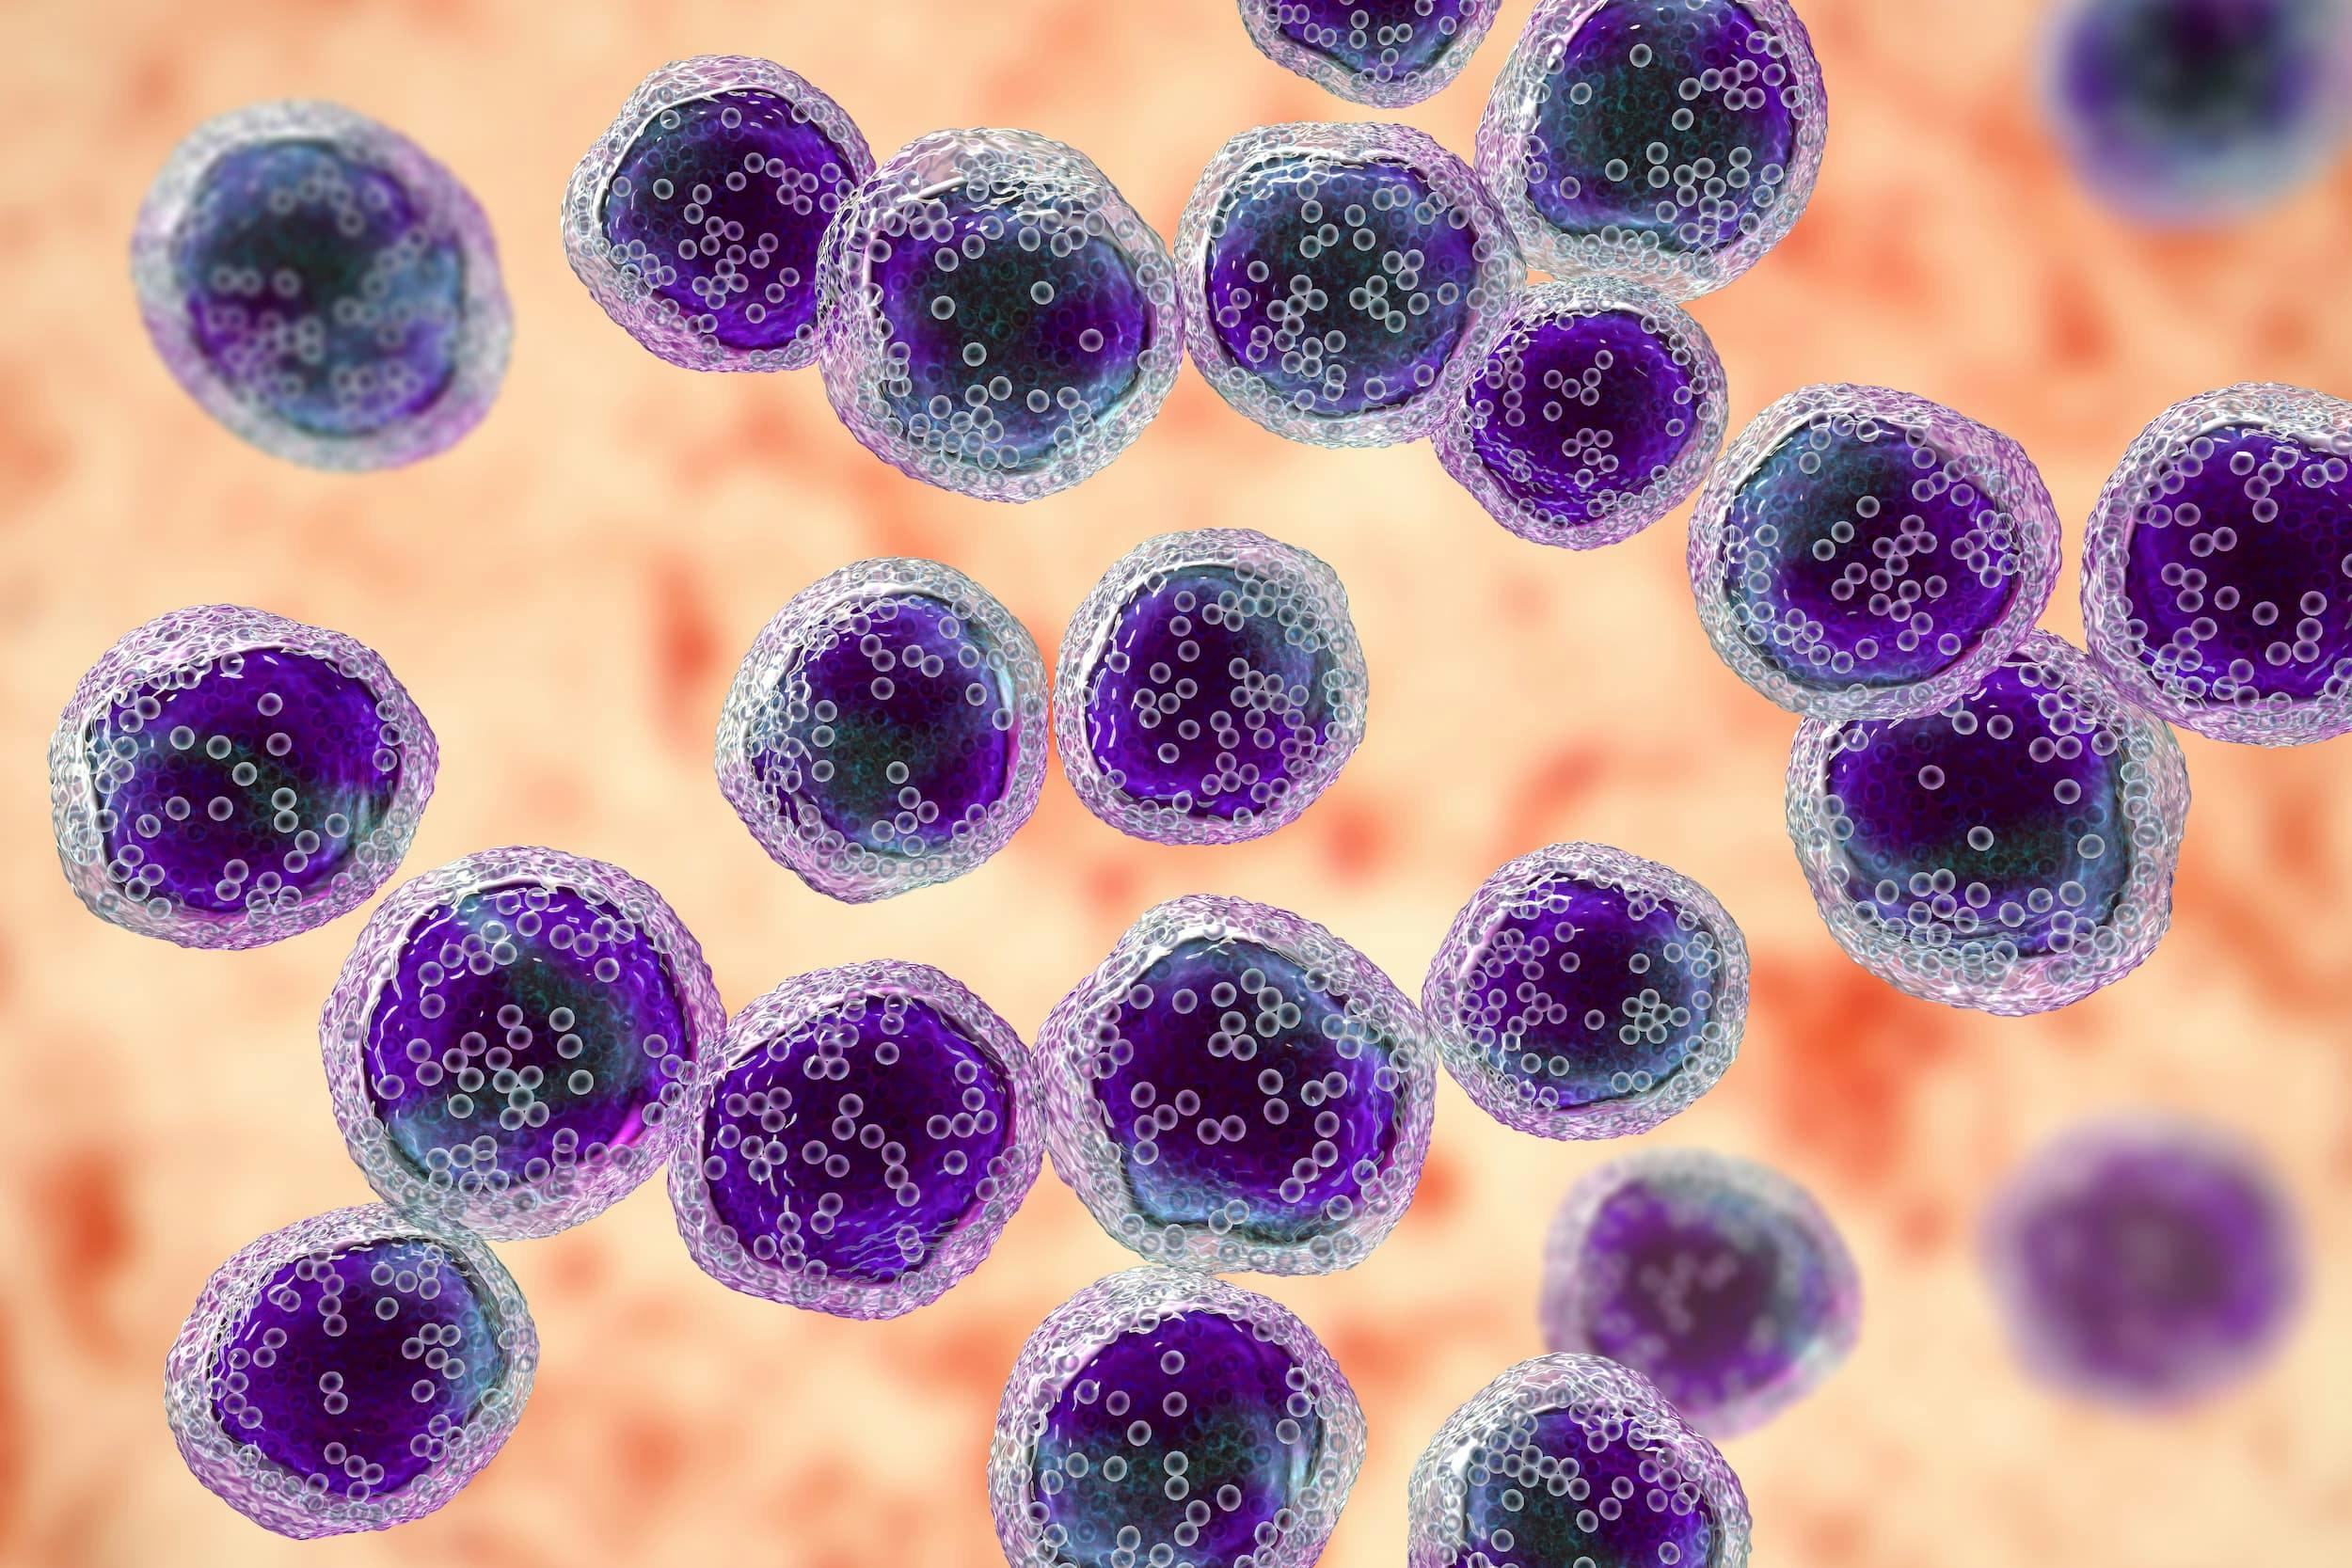 B-cell lymphoma Image credit: © Dr_Microbe via Adobe Stock